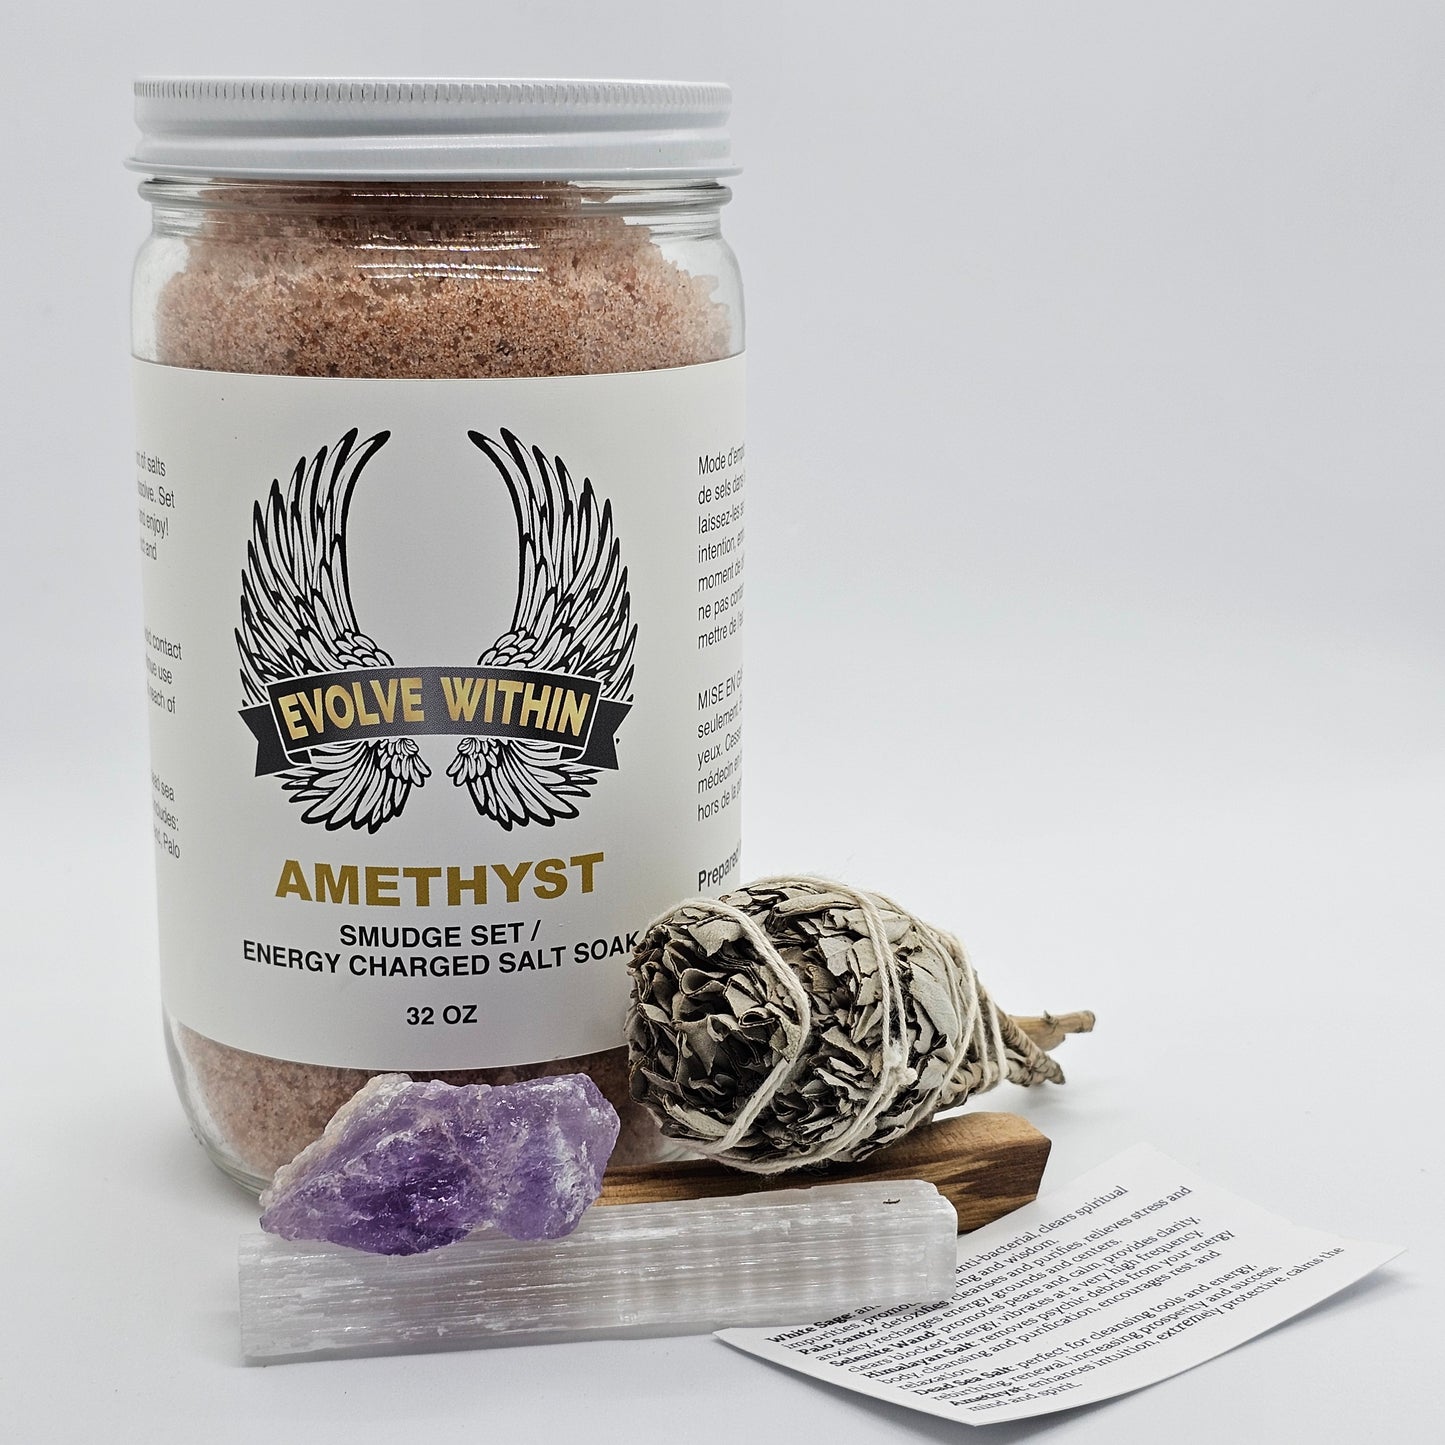 Amethyst Smudge Set / Energy Charged Salt Soak